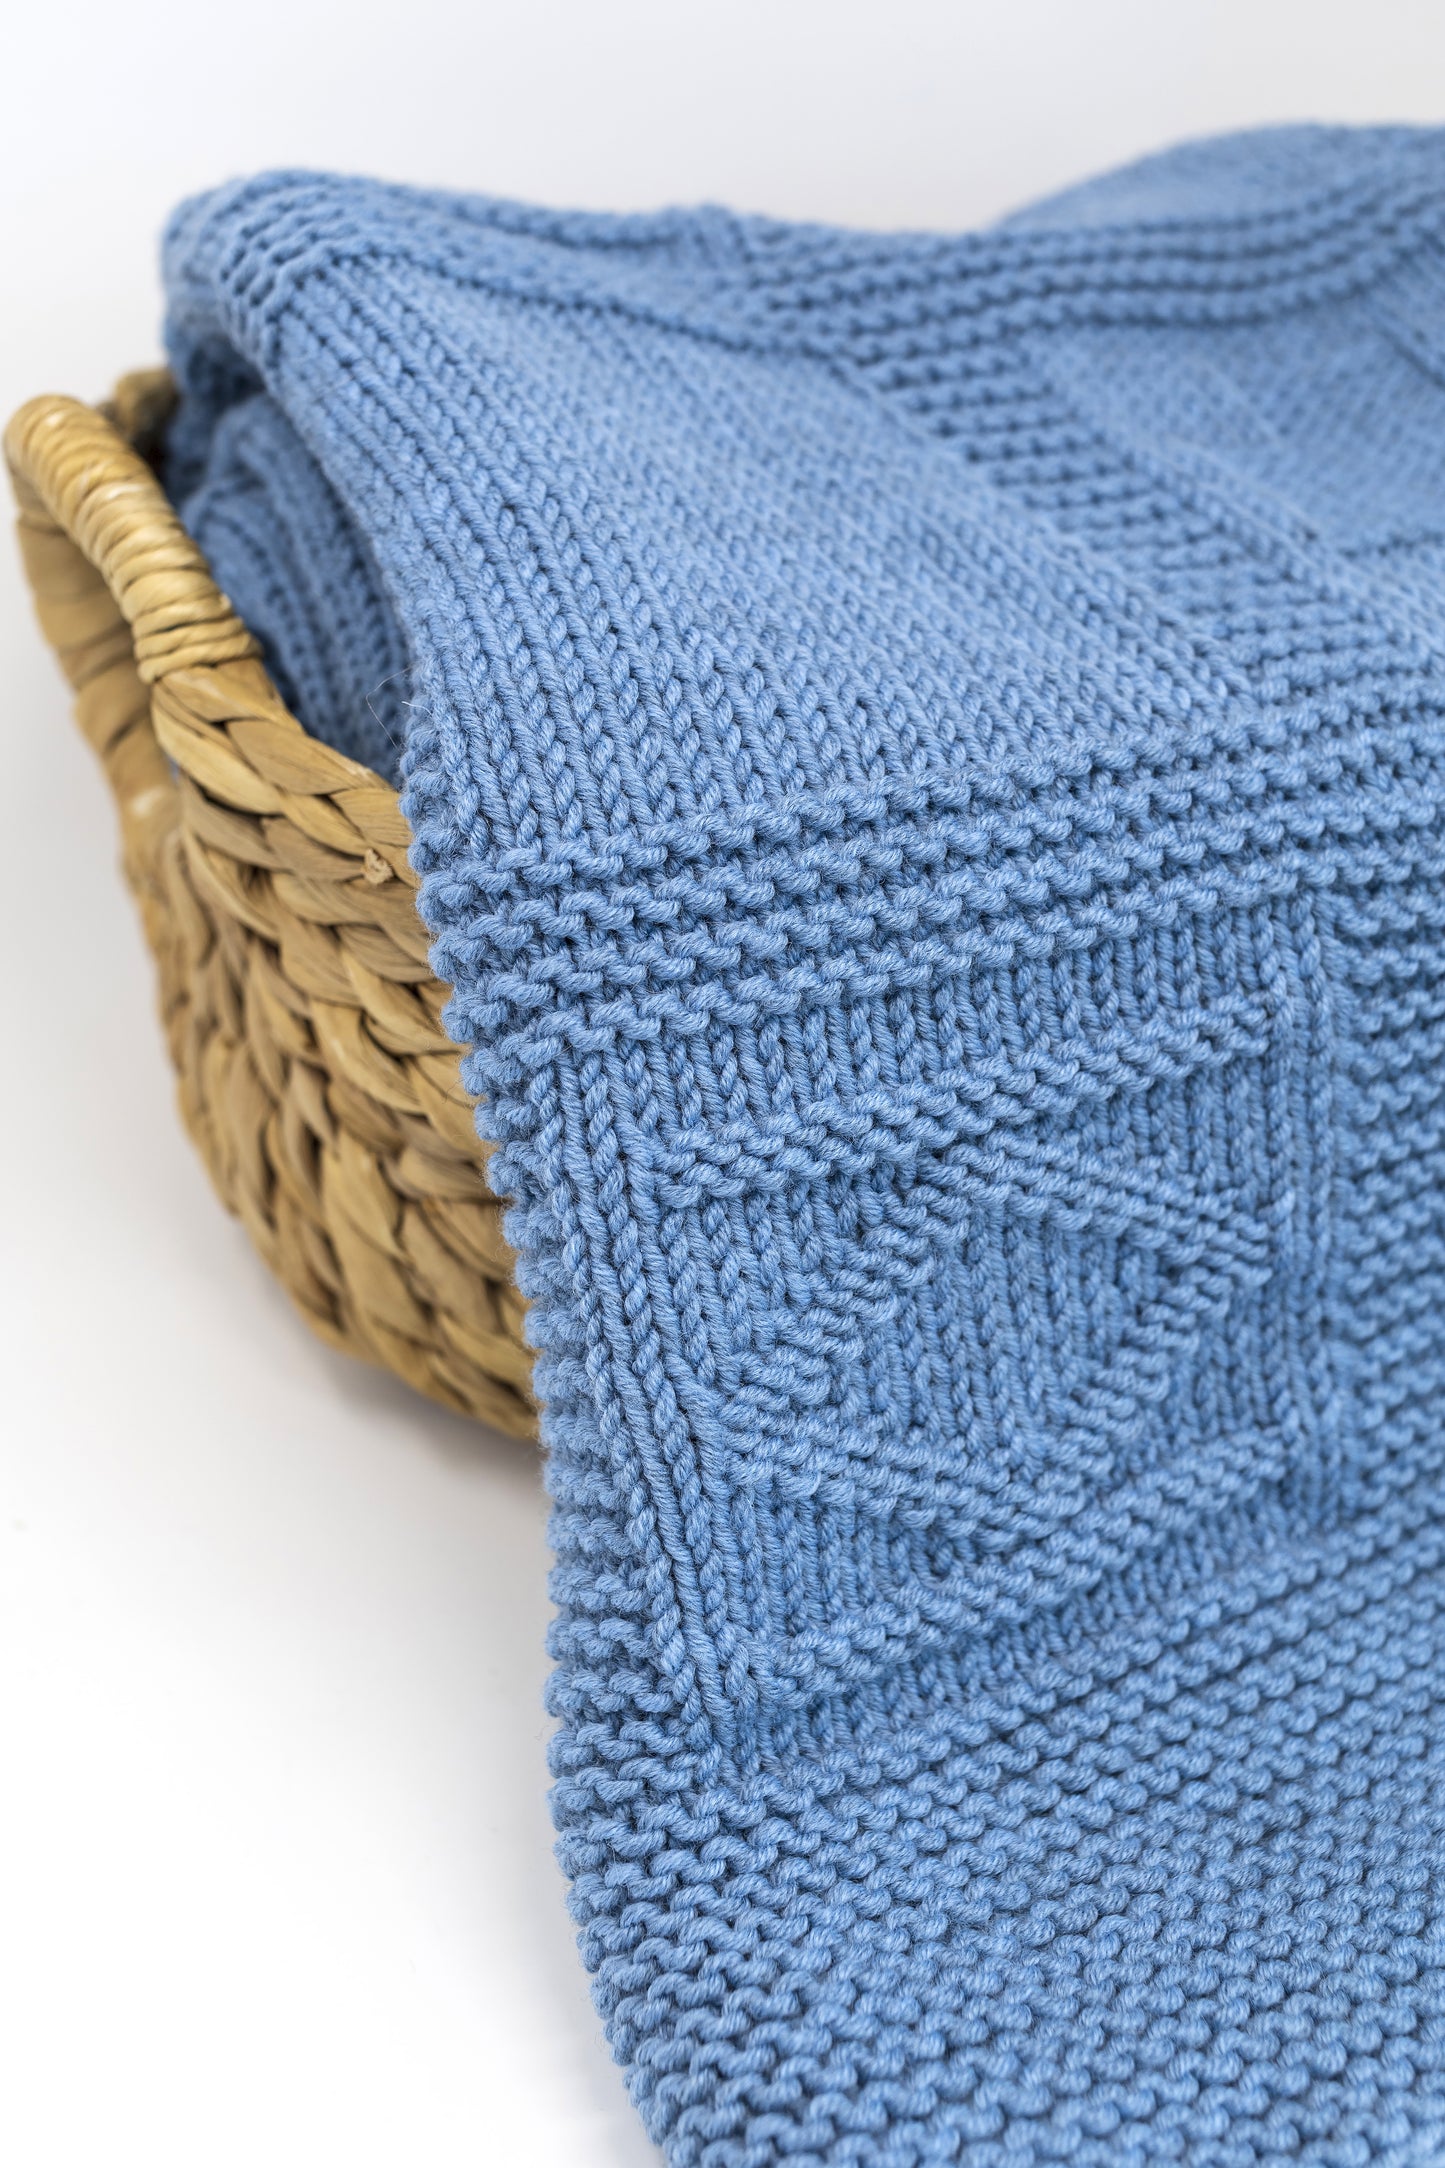 details of blue merino wool hand-knitted baby blanket in geometric knitting pattern